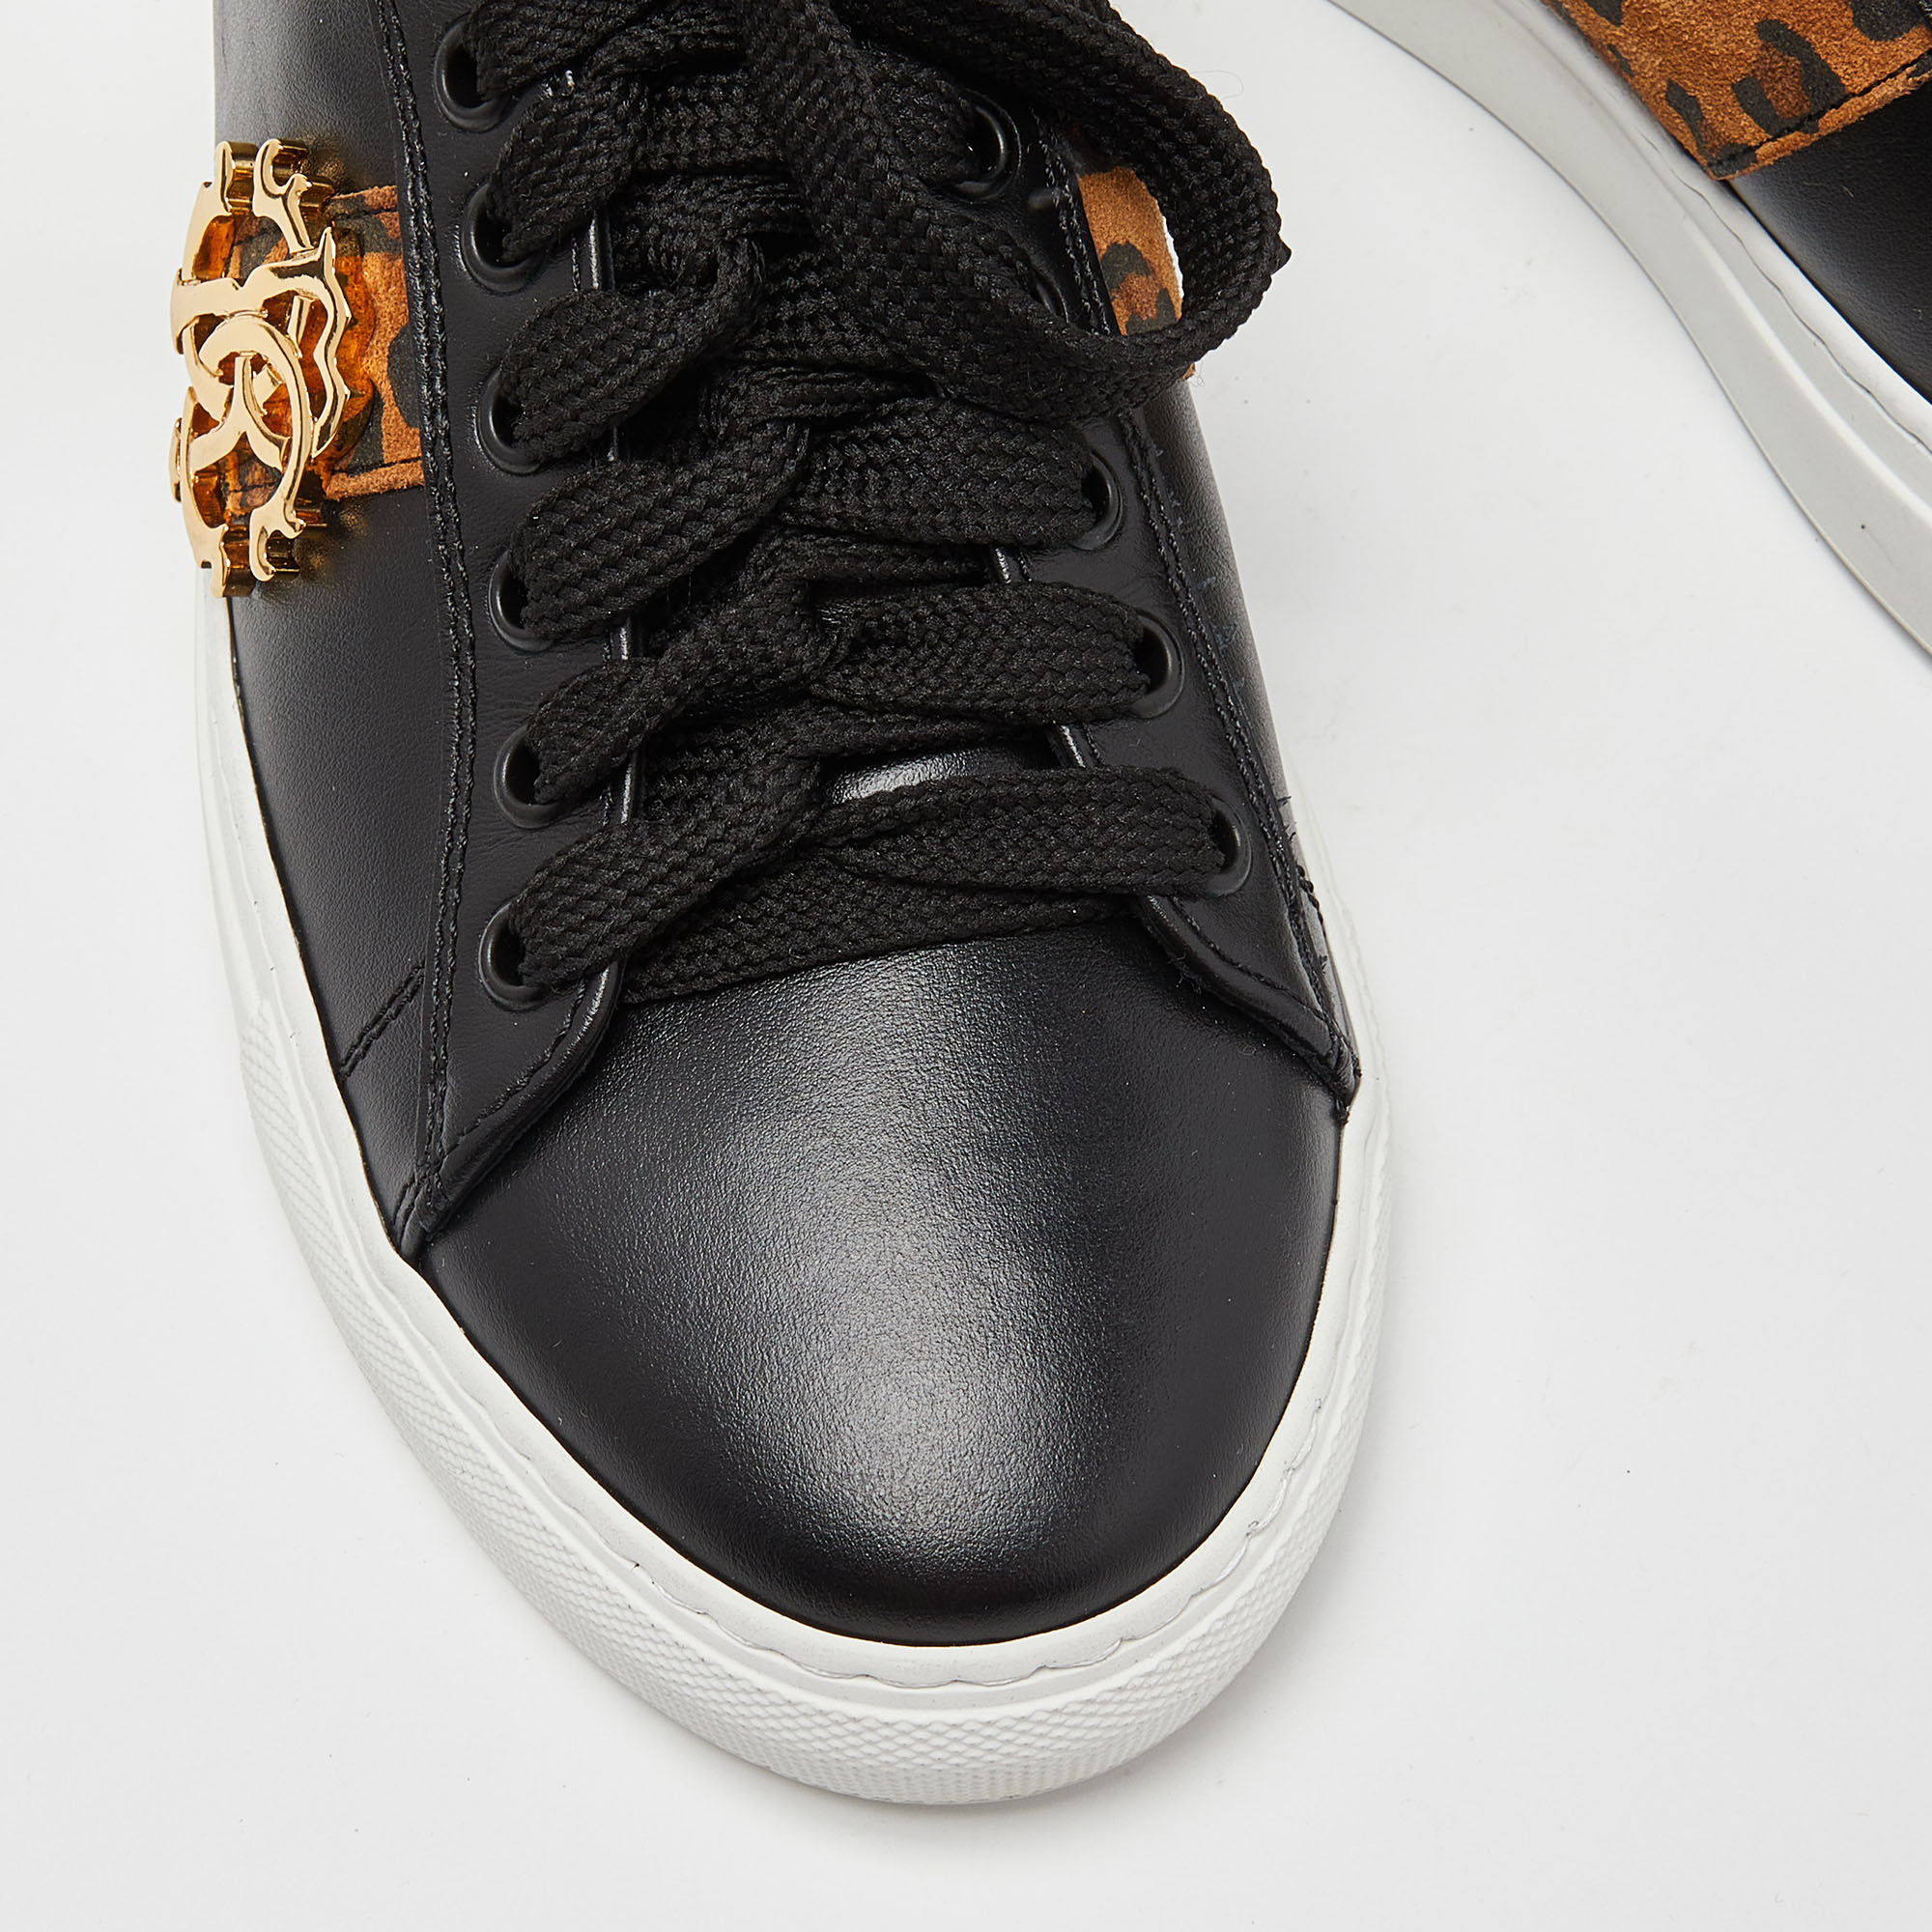 Roberto Cavalli Black Leather And Nubuck Slip On Sneakers Size 36